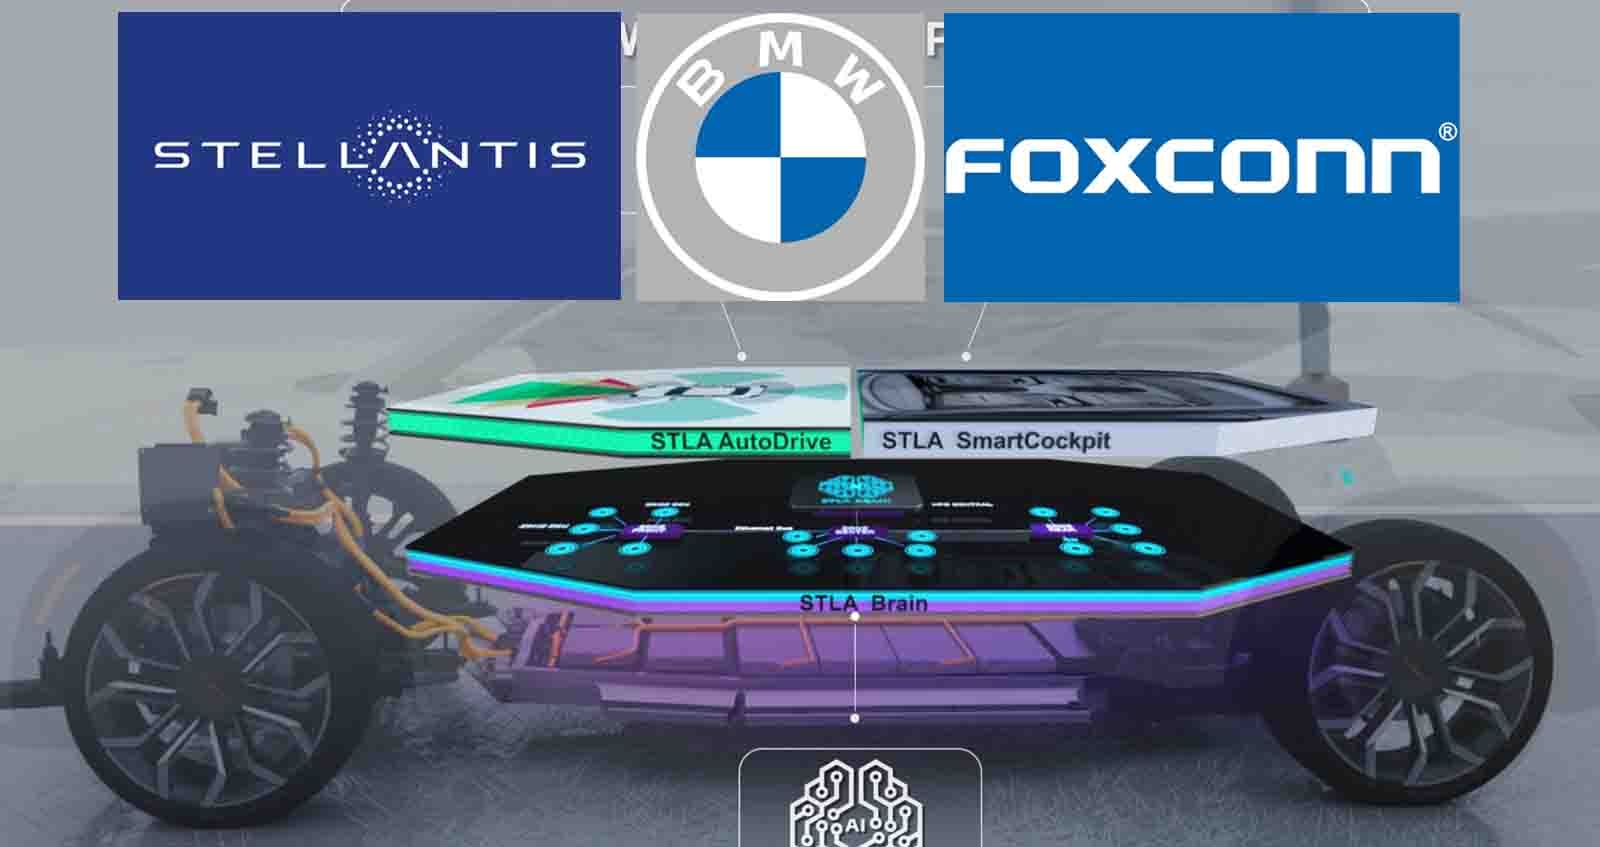 Stellantis ร่วมมือกับ BMW และ Foxconn พัฒนาเทคโนโลยีอัตโนมัติ และ ชิปเซมิคอนดักเตอร์